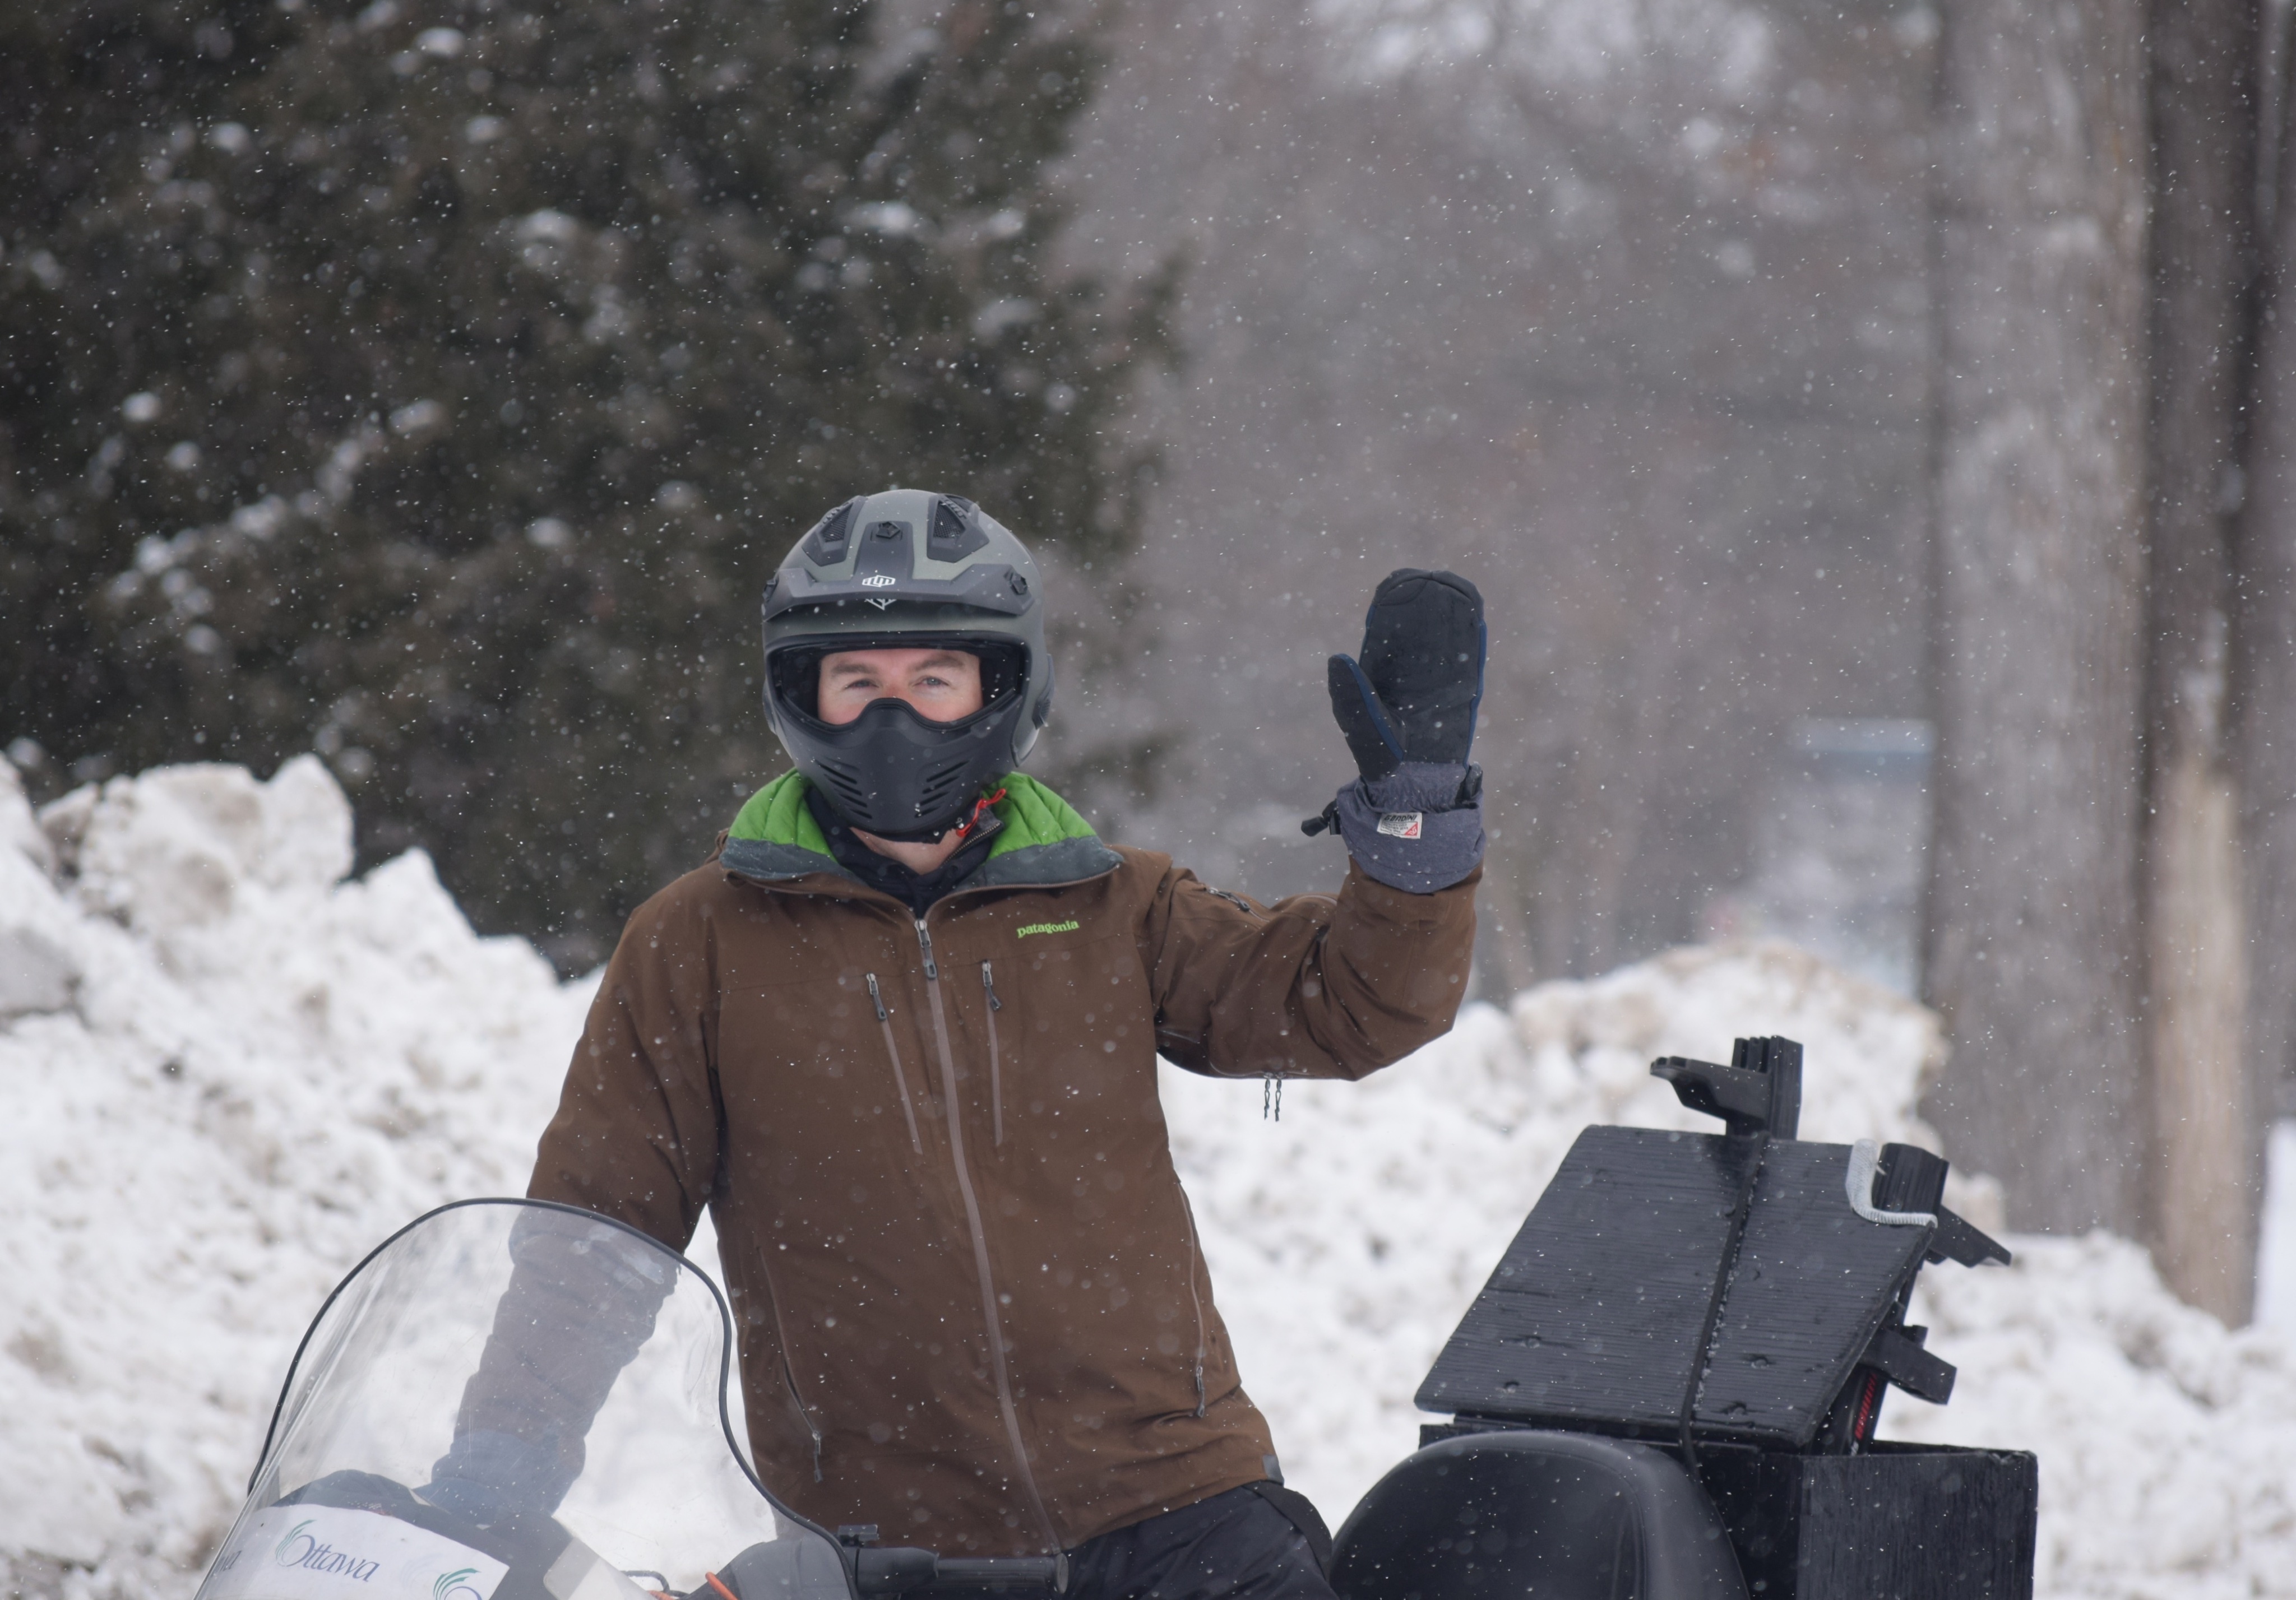 James Battye on a snowmobile, wearing a helmet and waving